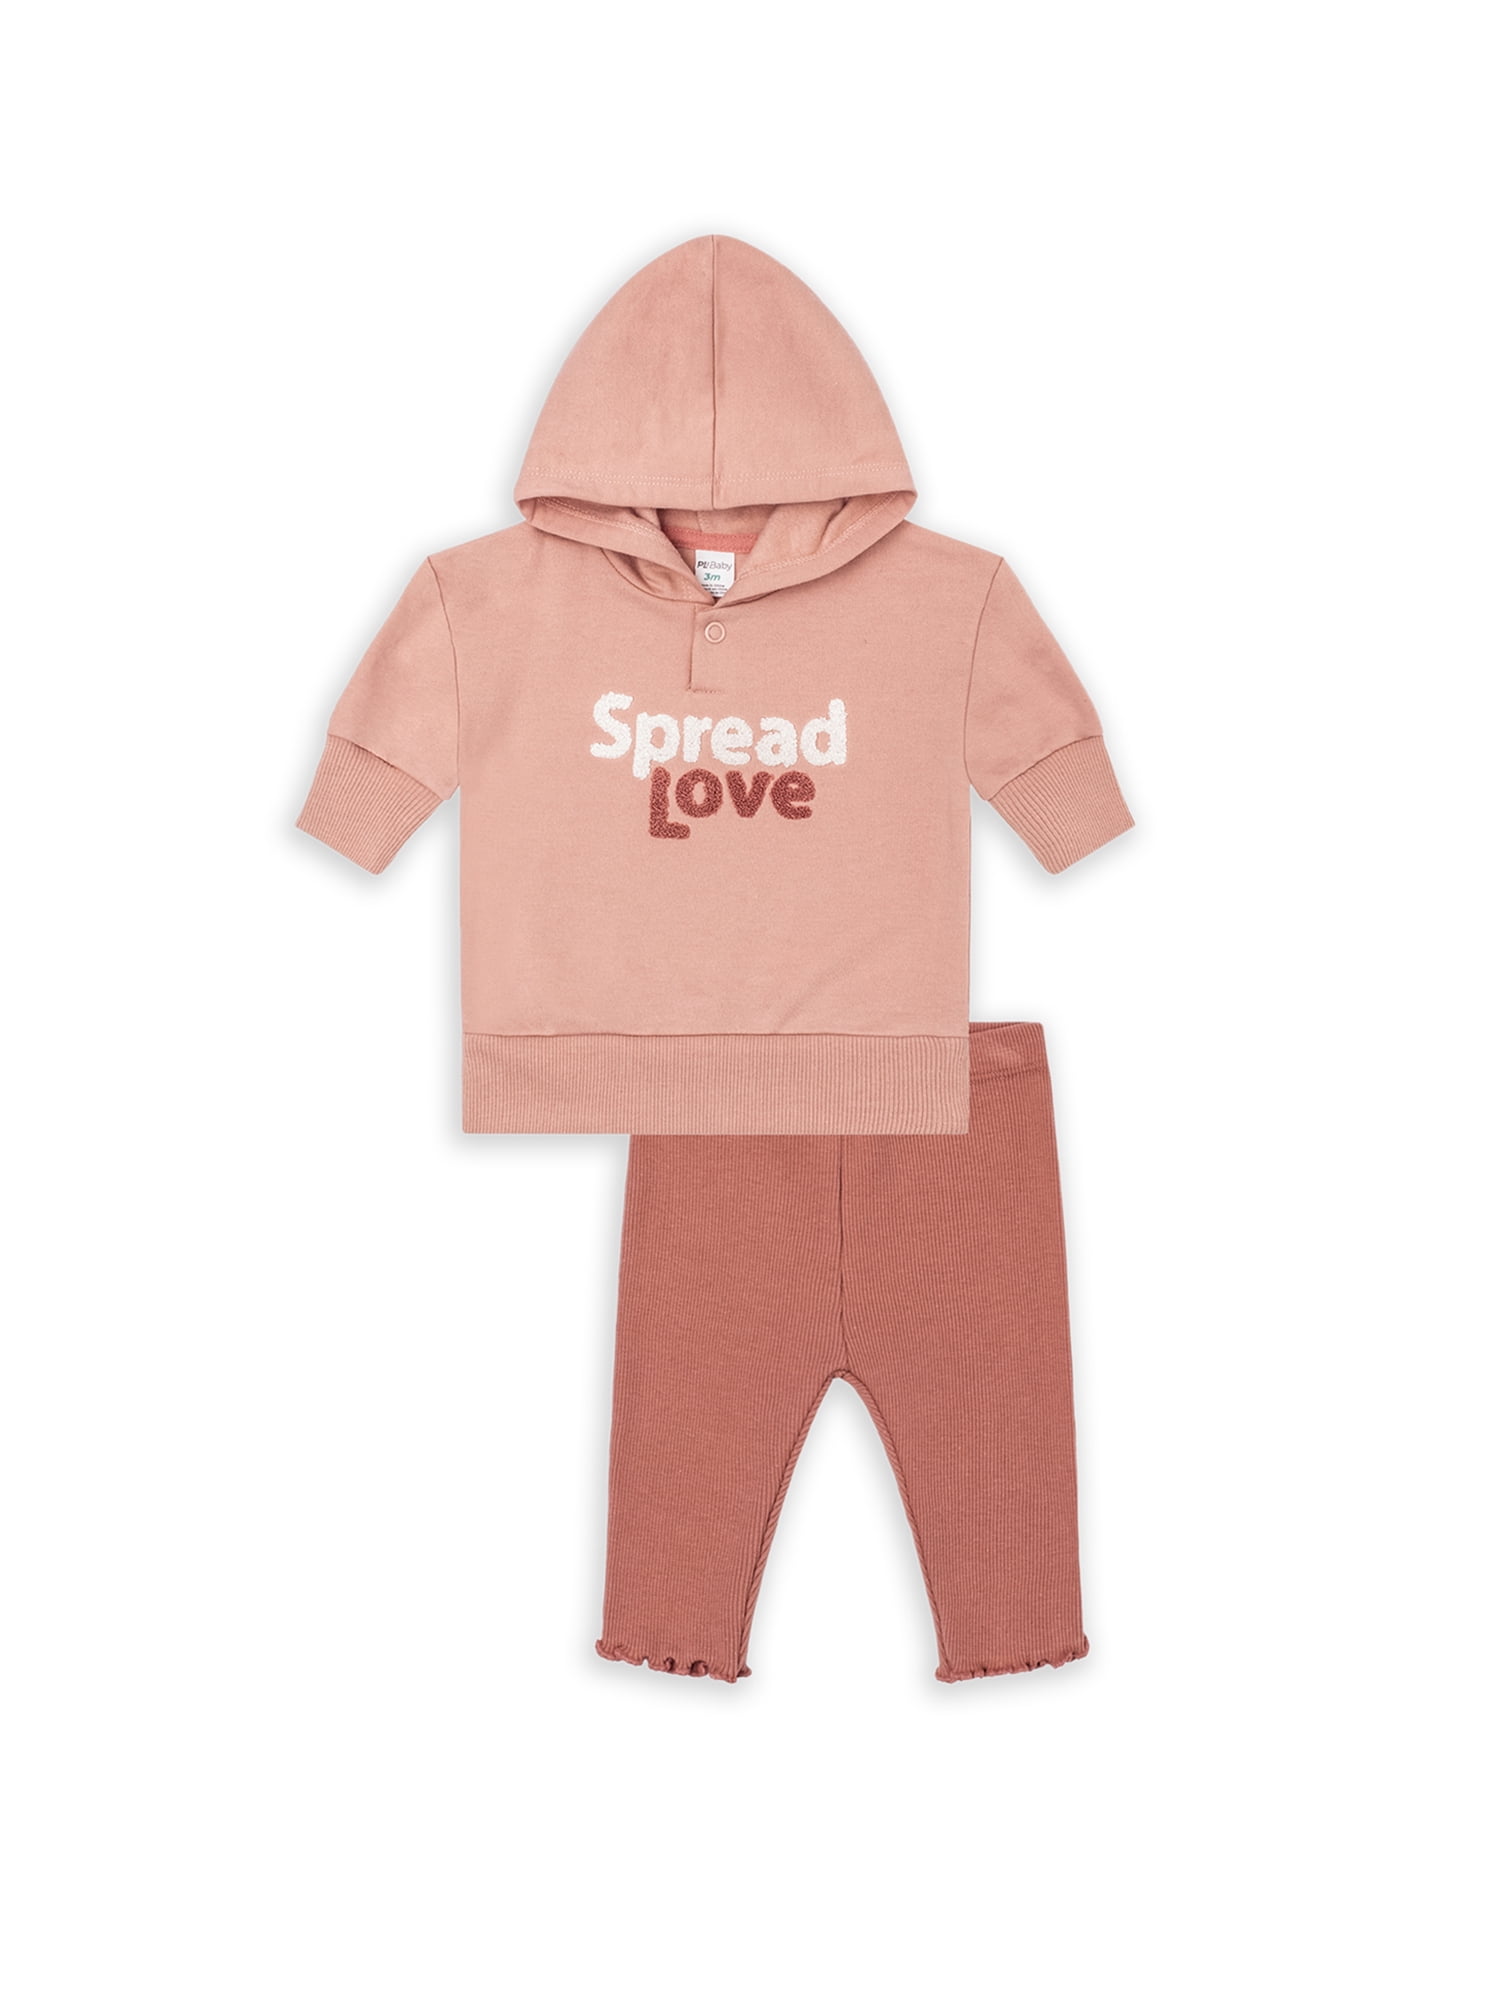 Bestudeer explosie duurzame grondstof Petit Lem Baby Girl 3 PC Fashion Tunic Set (3M-24M) - Walmart.com